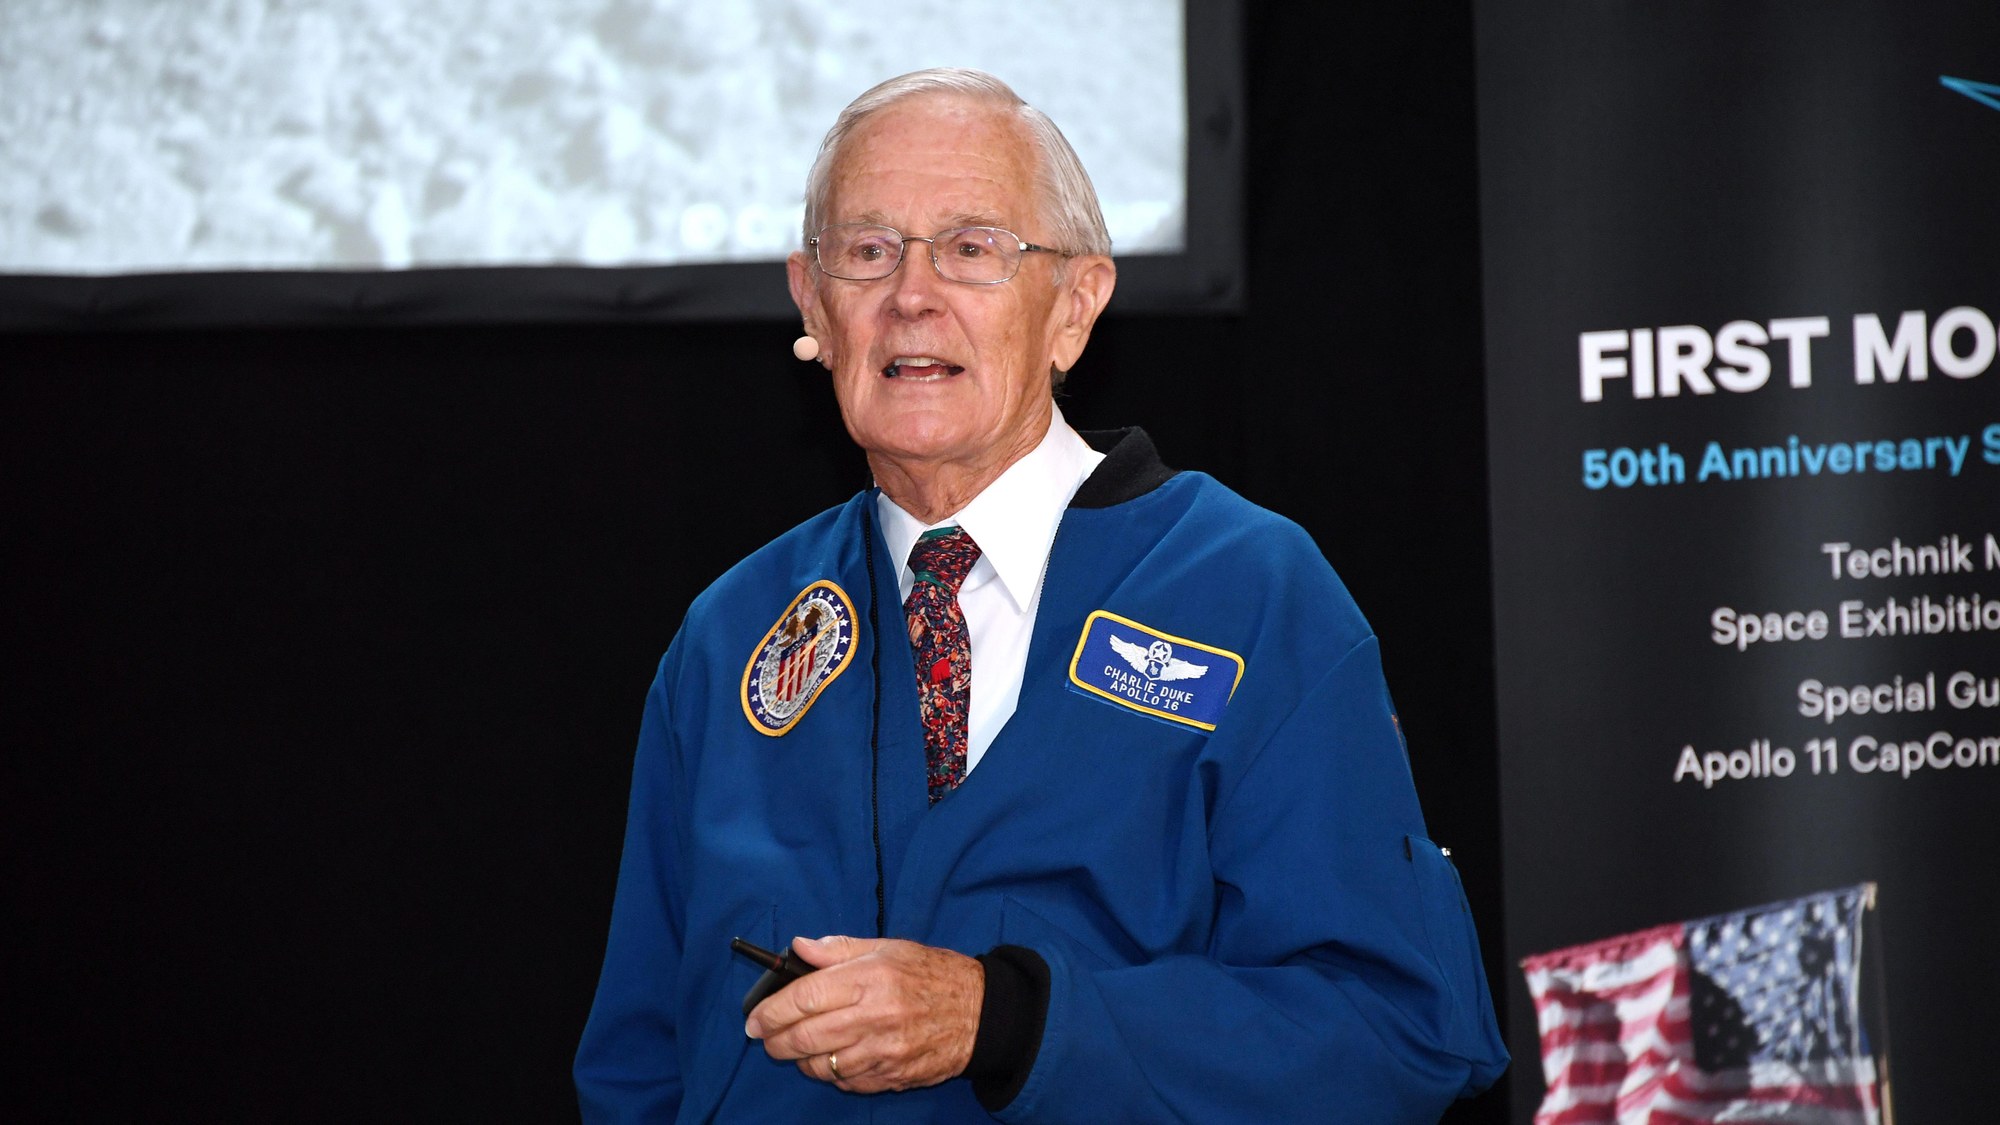 Apollo-11-CapCom und Apollo-16-Moonwalker Charles M. Duke Jr.